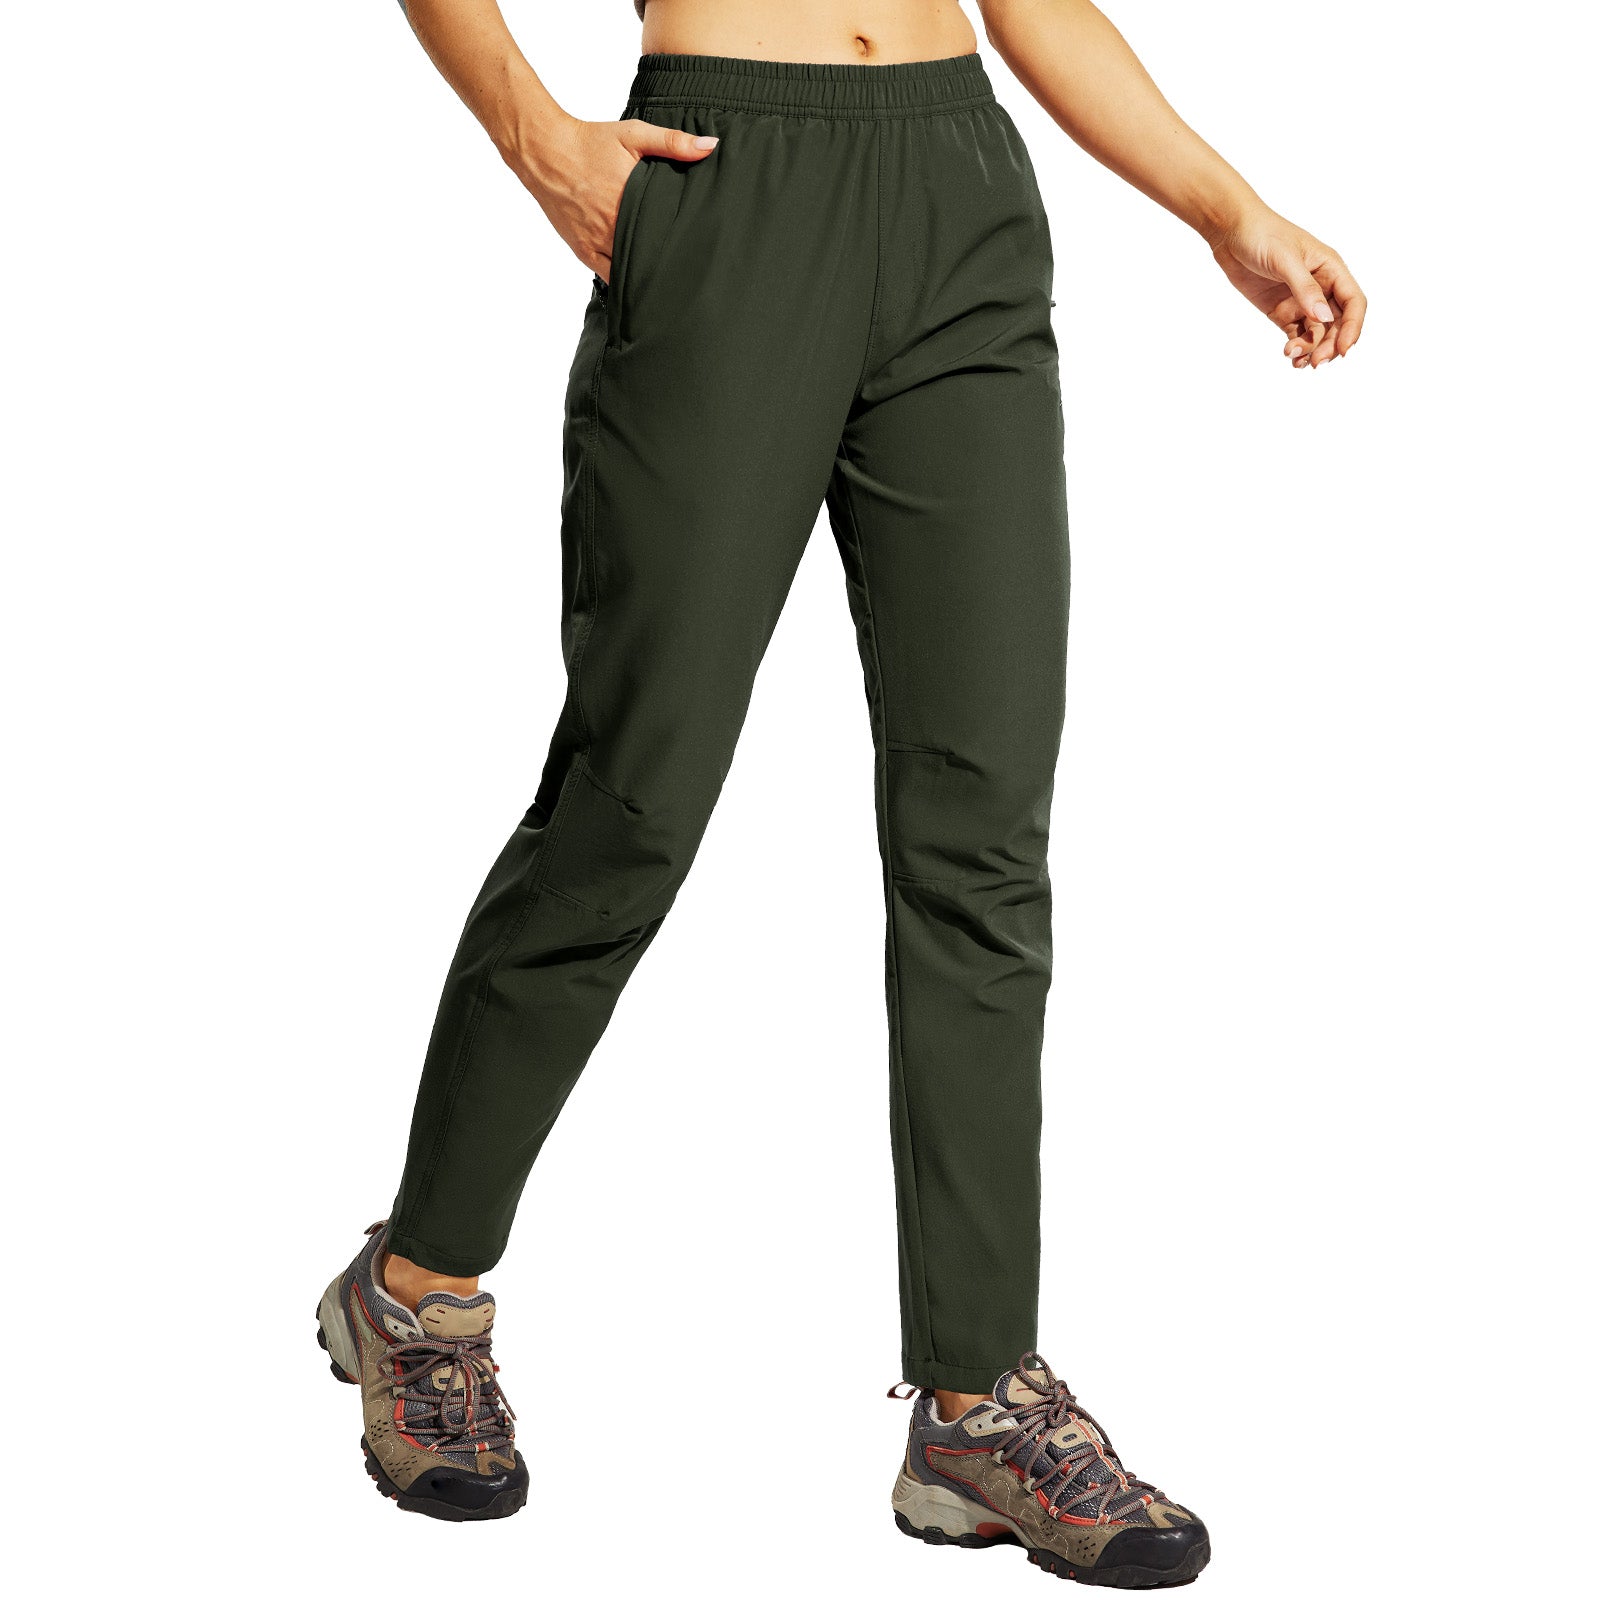 Haimont Women's Hiking Pants Quick Dry Cargo Pants